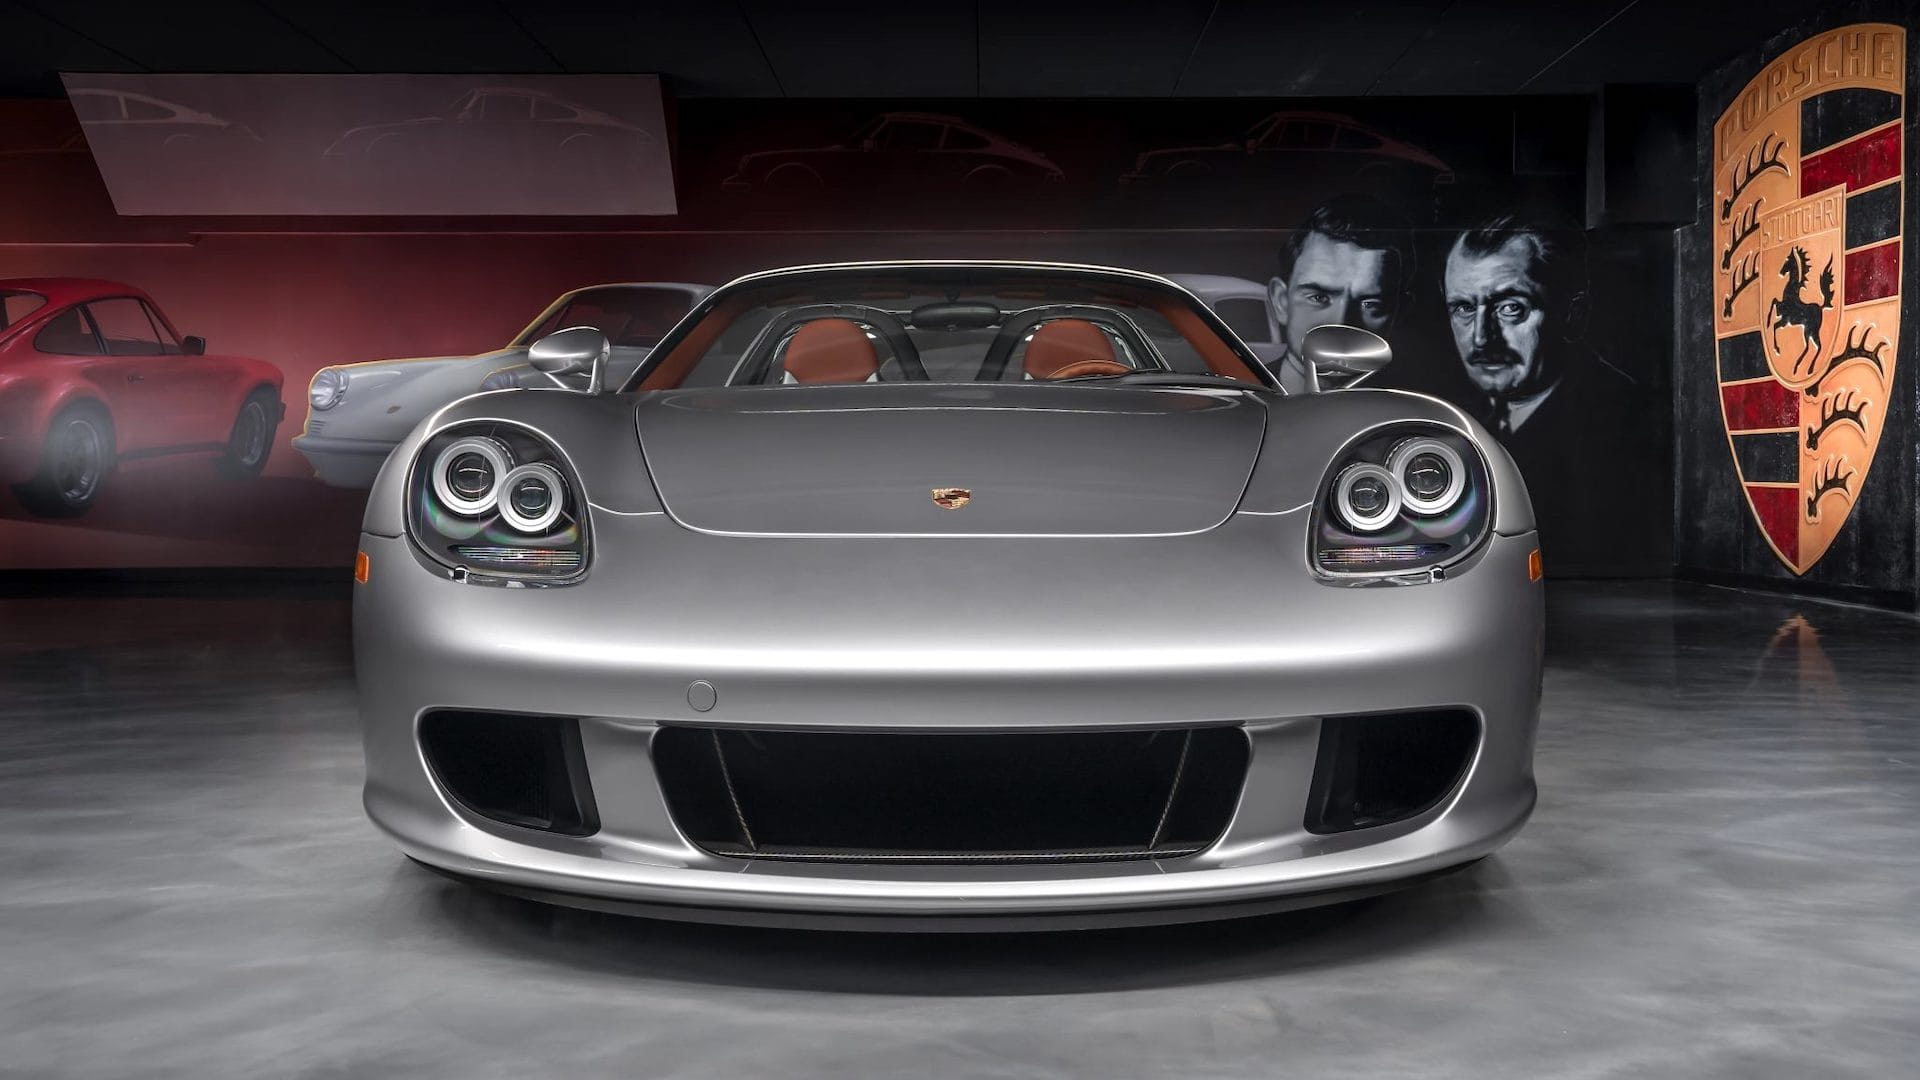 Showroom-fresh Porsche Carrera GT sells for a record $2 million